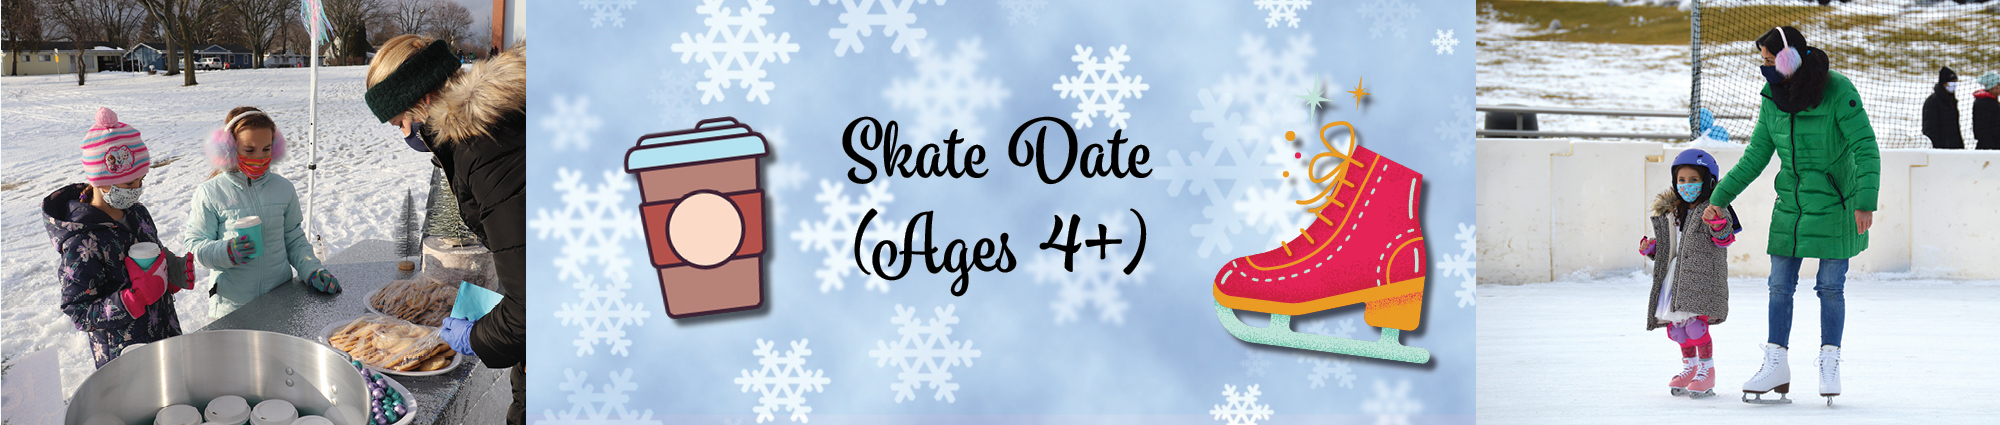 Skate Date